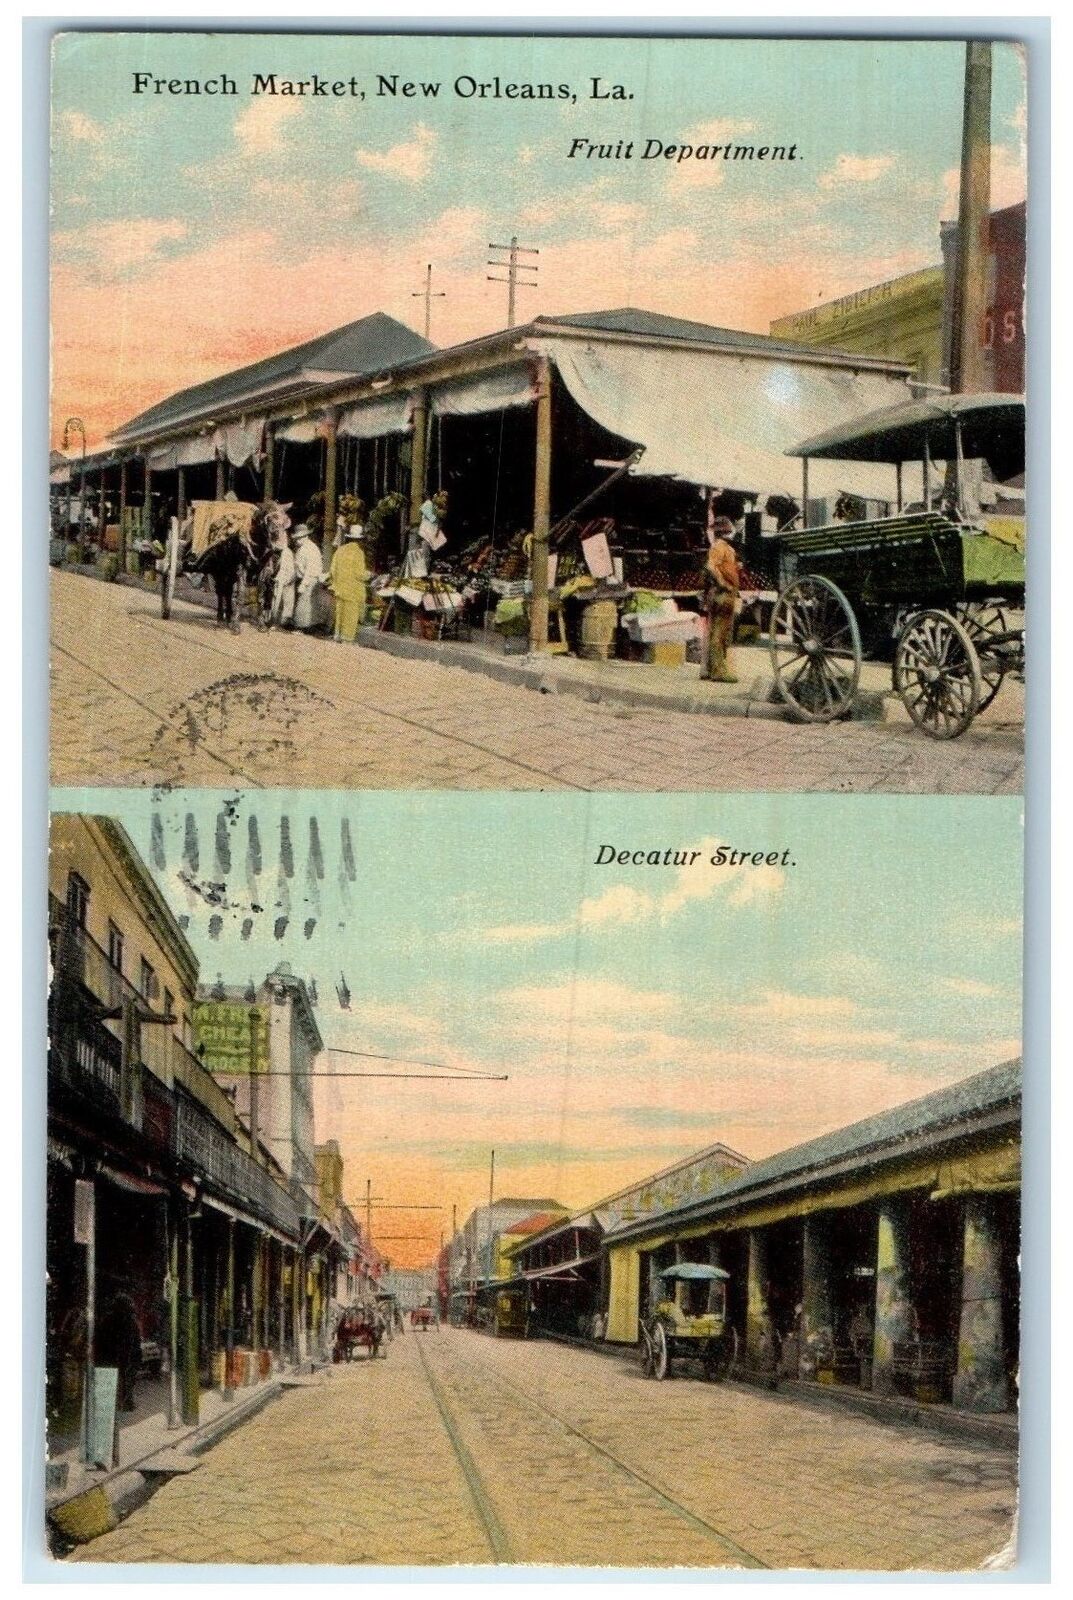 1911 French Market Fruit Dept. Decataur Street New Orleans Louisiana LA Postcard